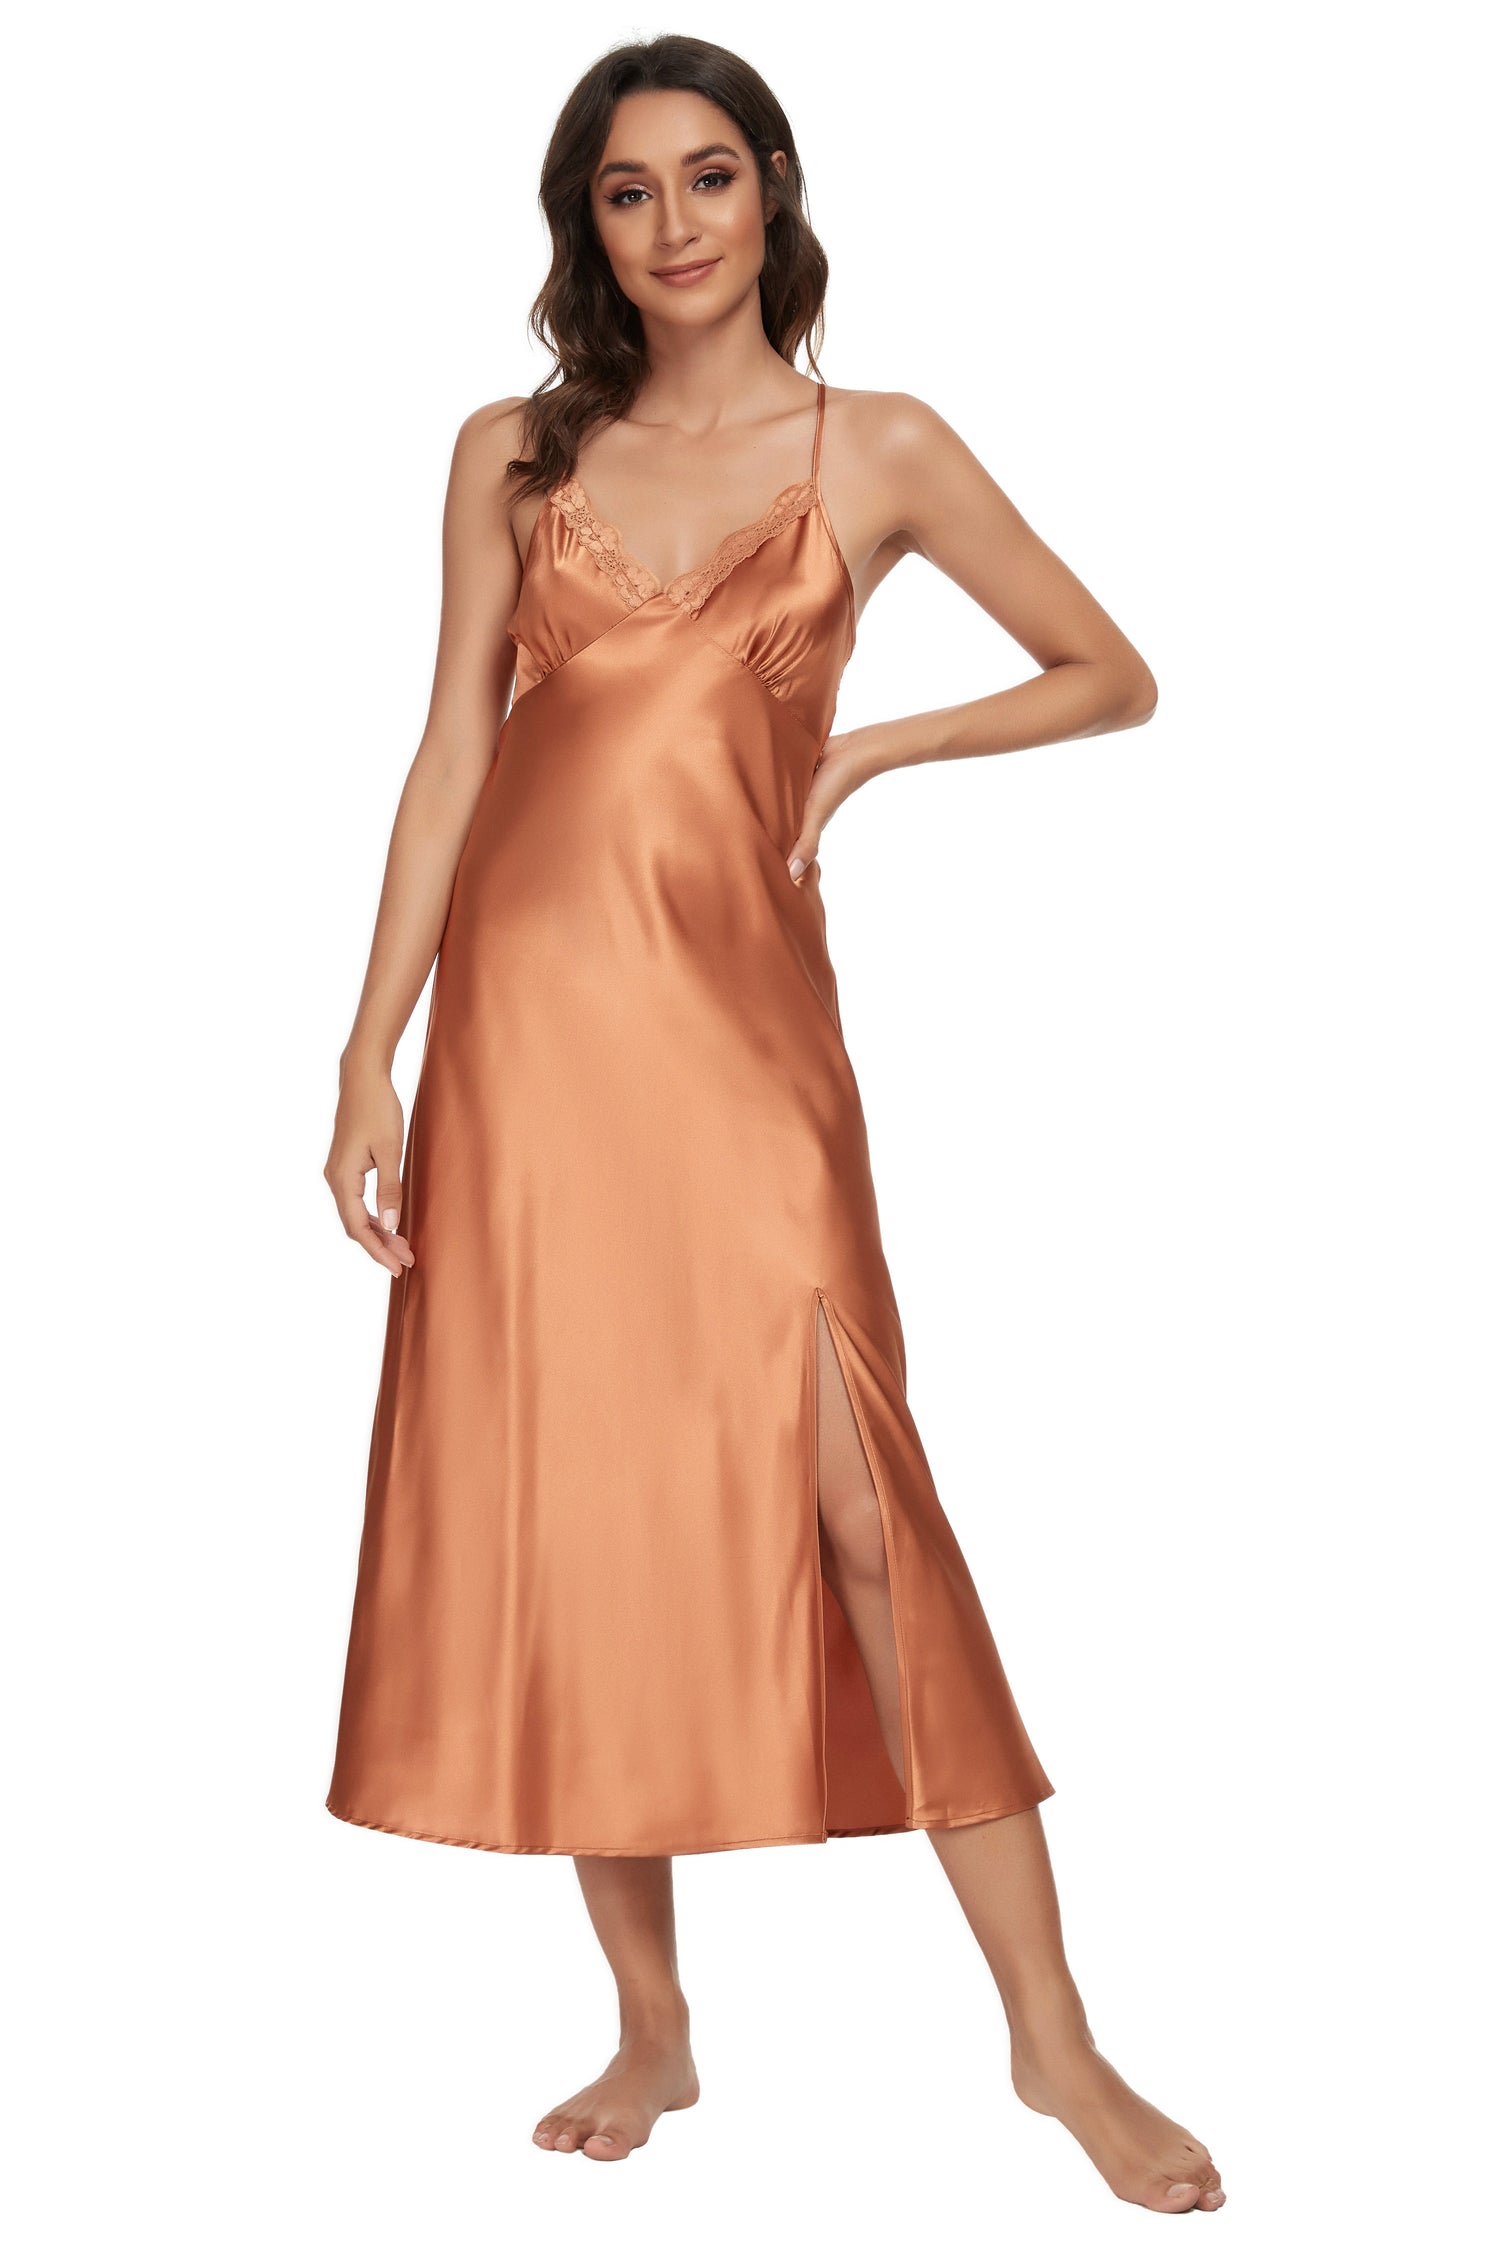 Sexy V-neck Nightgown Lace Lingerie Chemises Sleeveless Sleep Dress For Women Elegant Caramel